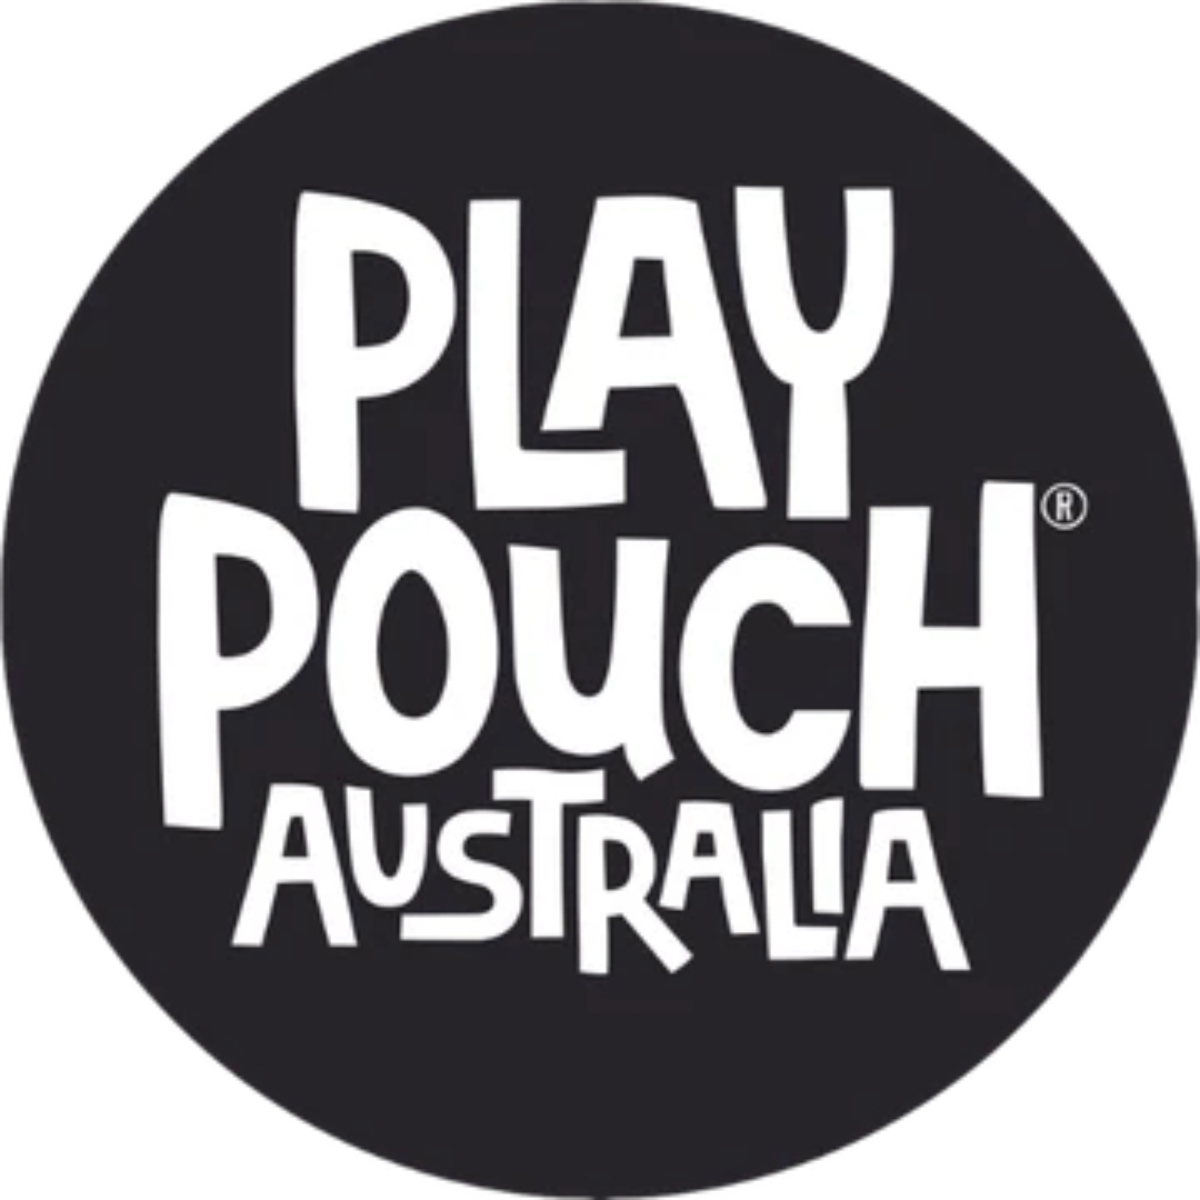 Play Pouch Australia